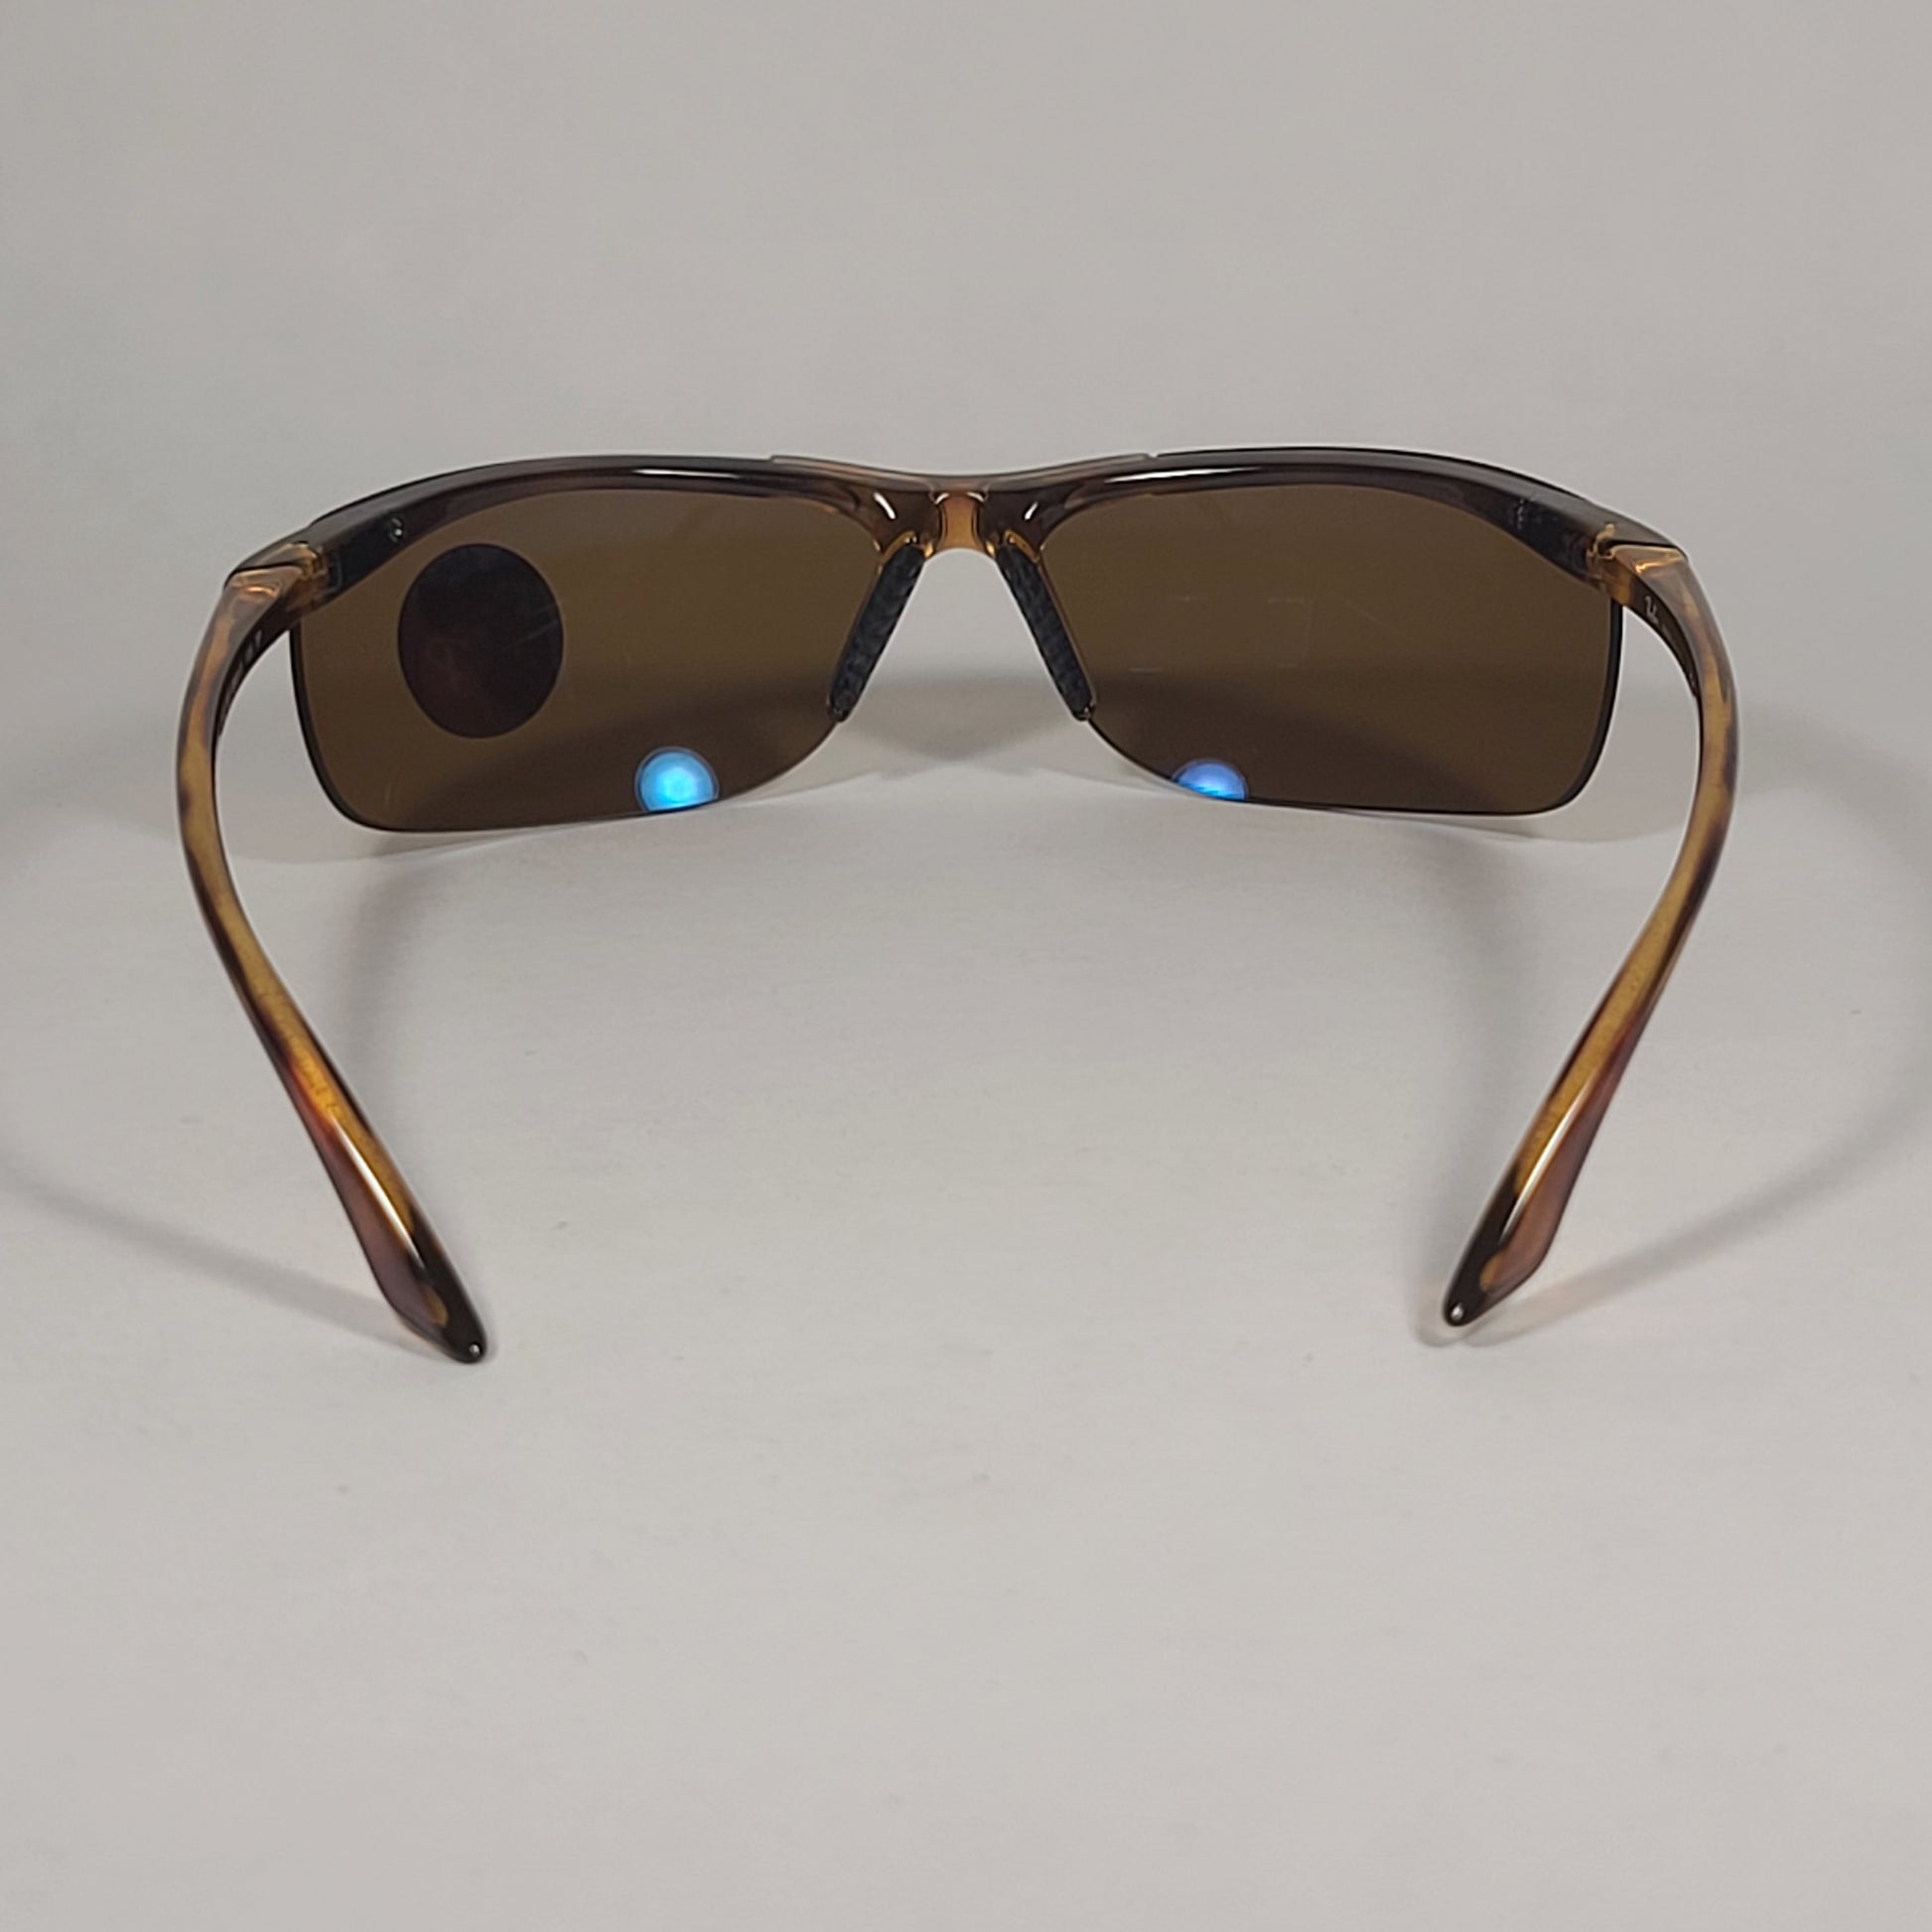 Ray-Ban Active Lifestyle Rimless Polarized Sunglasses RB4085 642/83 Sport Wrap Havana Brown Lens - Sunglasses